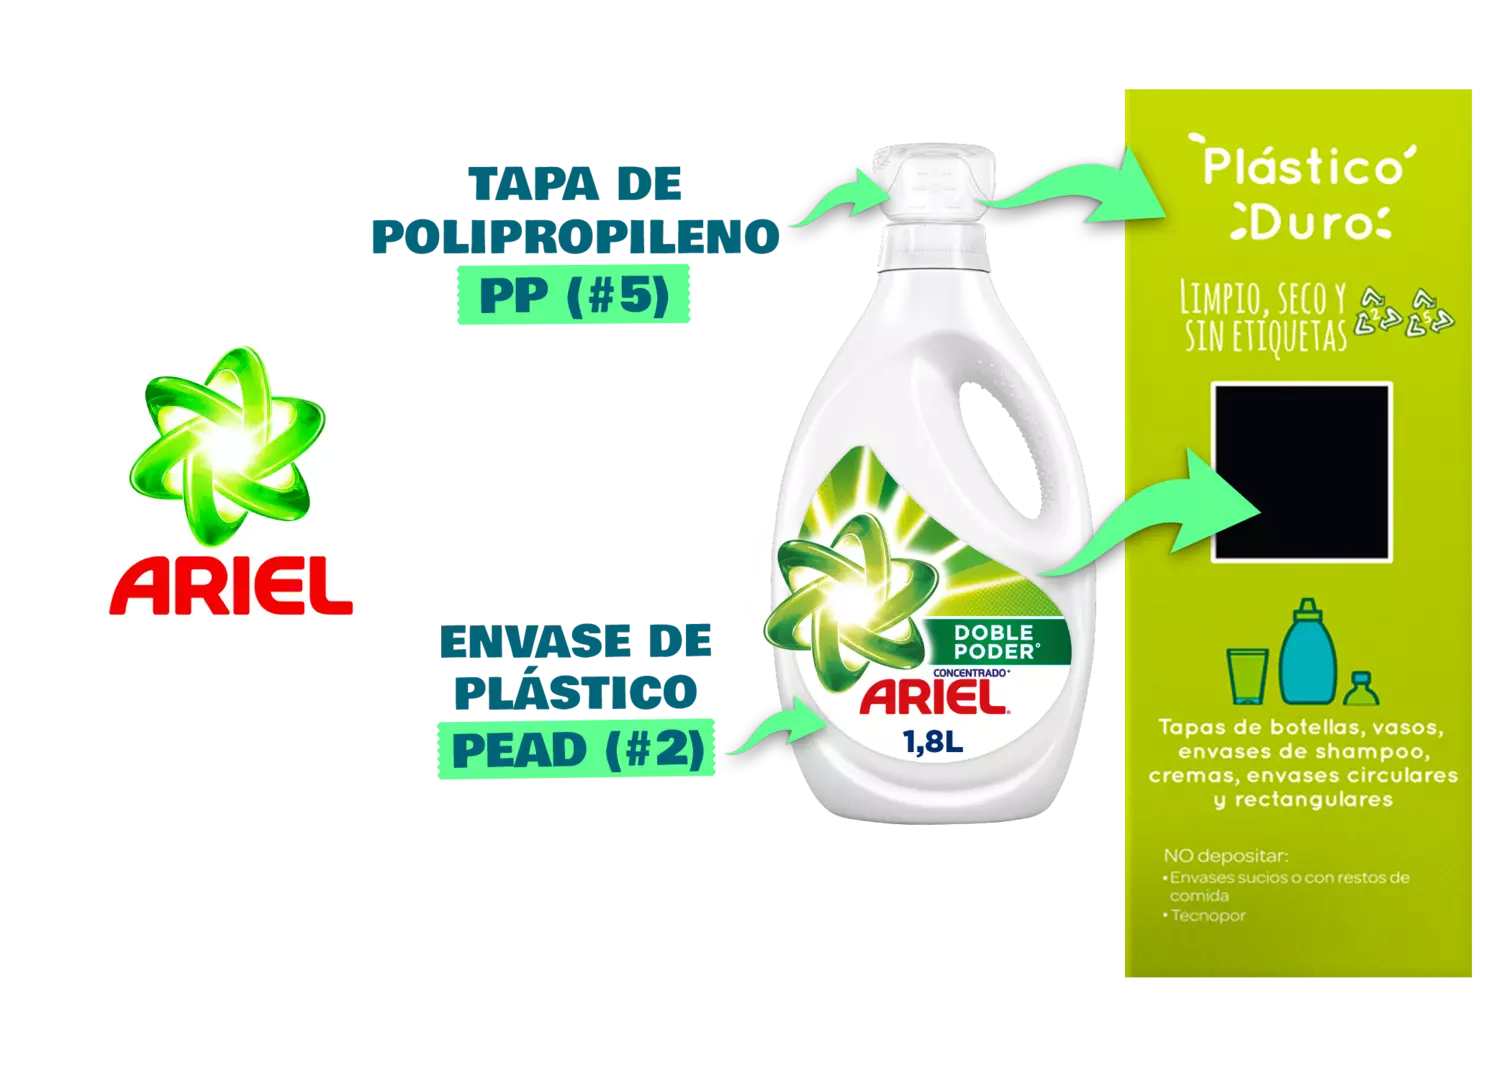 Detergente líquido ARIEL Doble Poder (1.8L) - #Reciclaconsciente